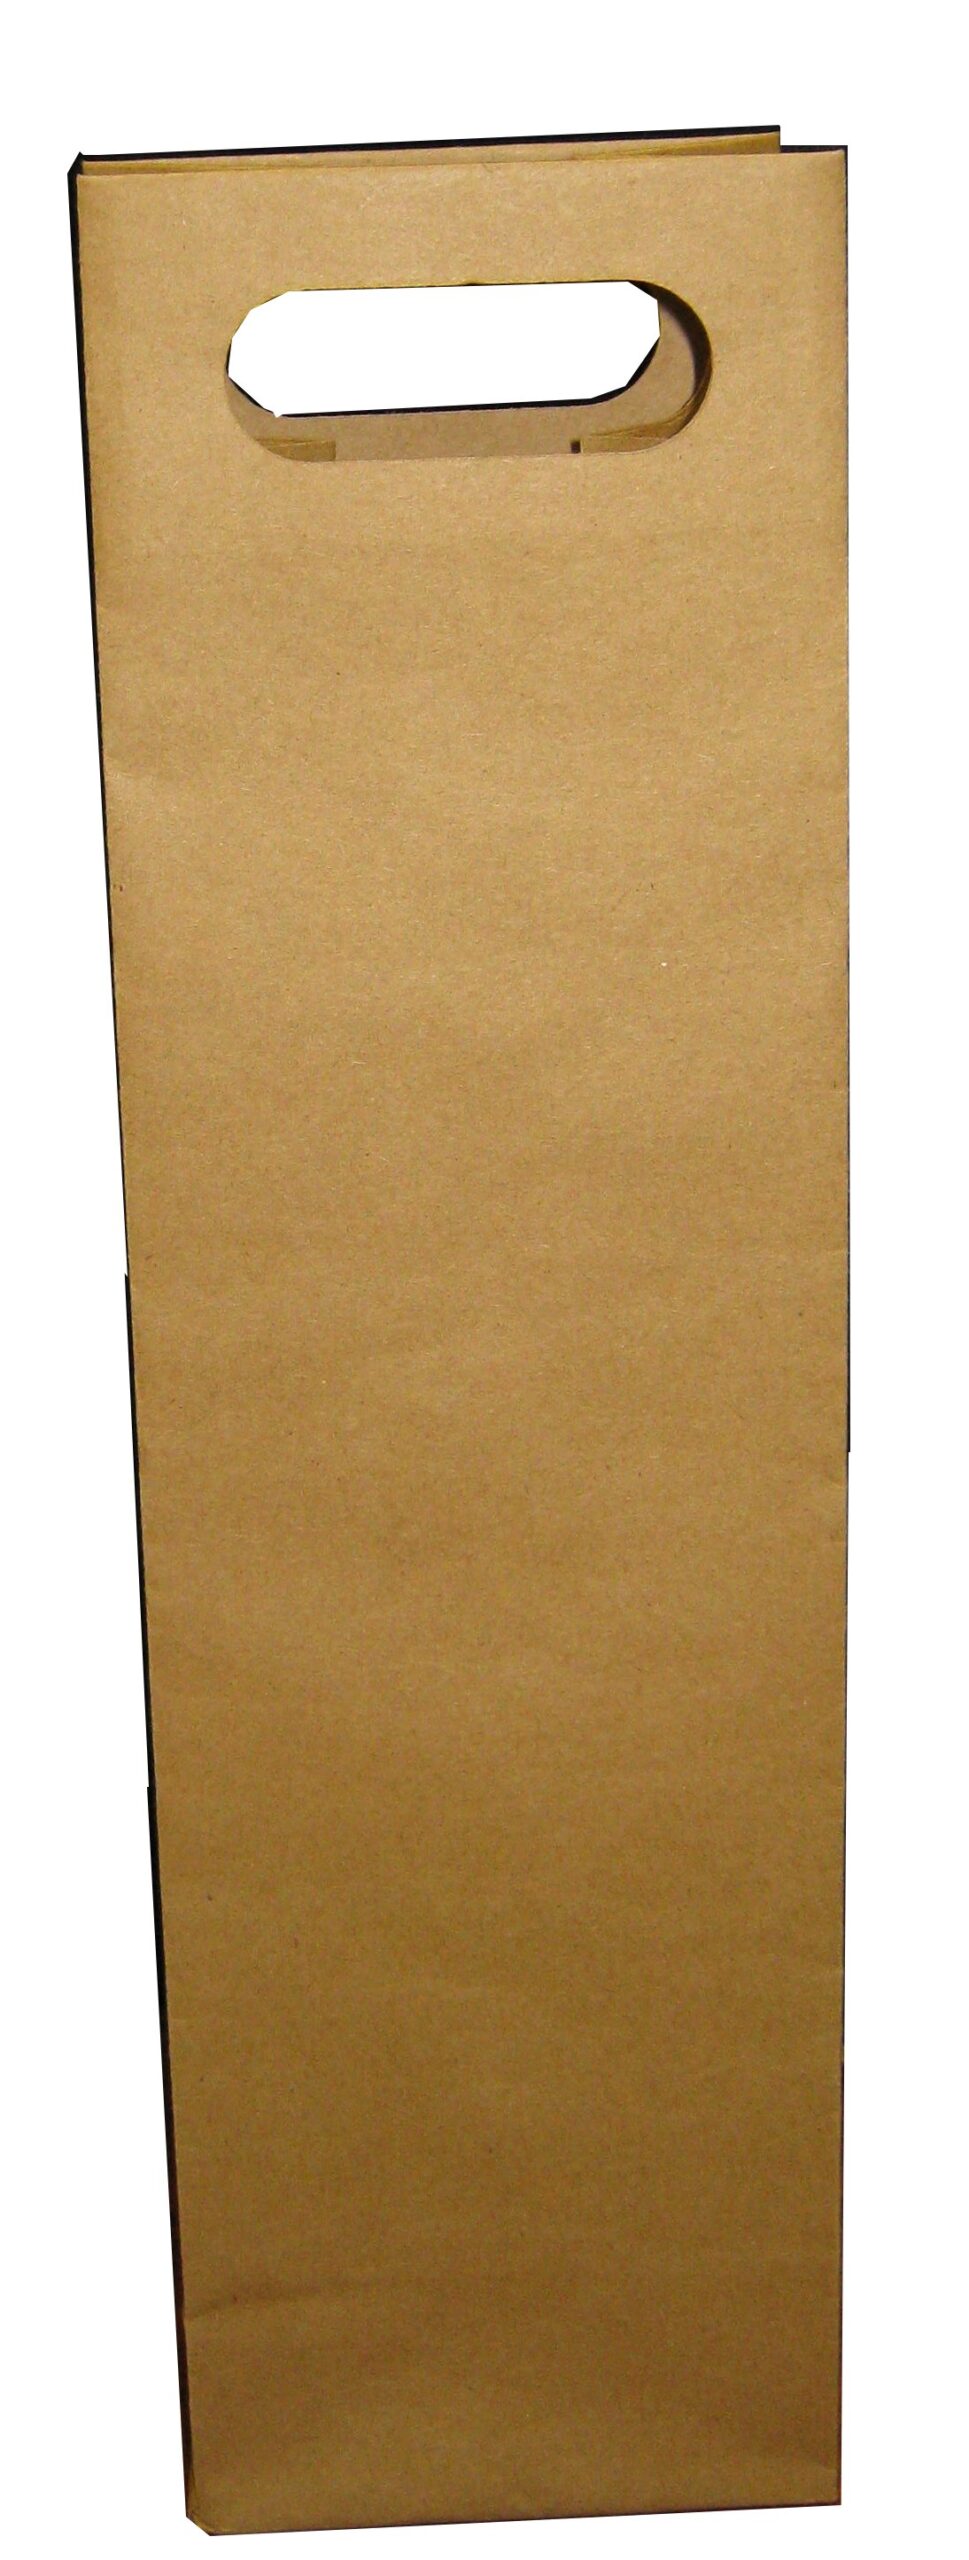 1 x 750mL Bottle Kraft Paper Bag with diecut handle